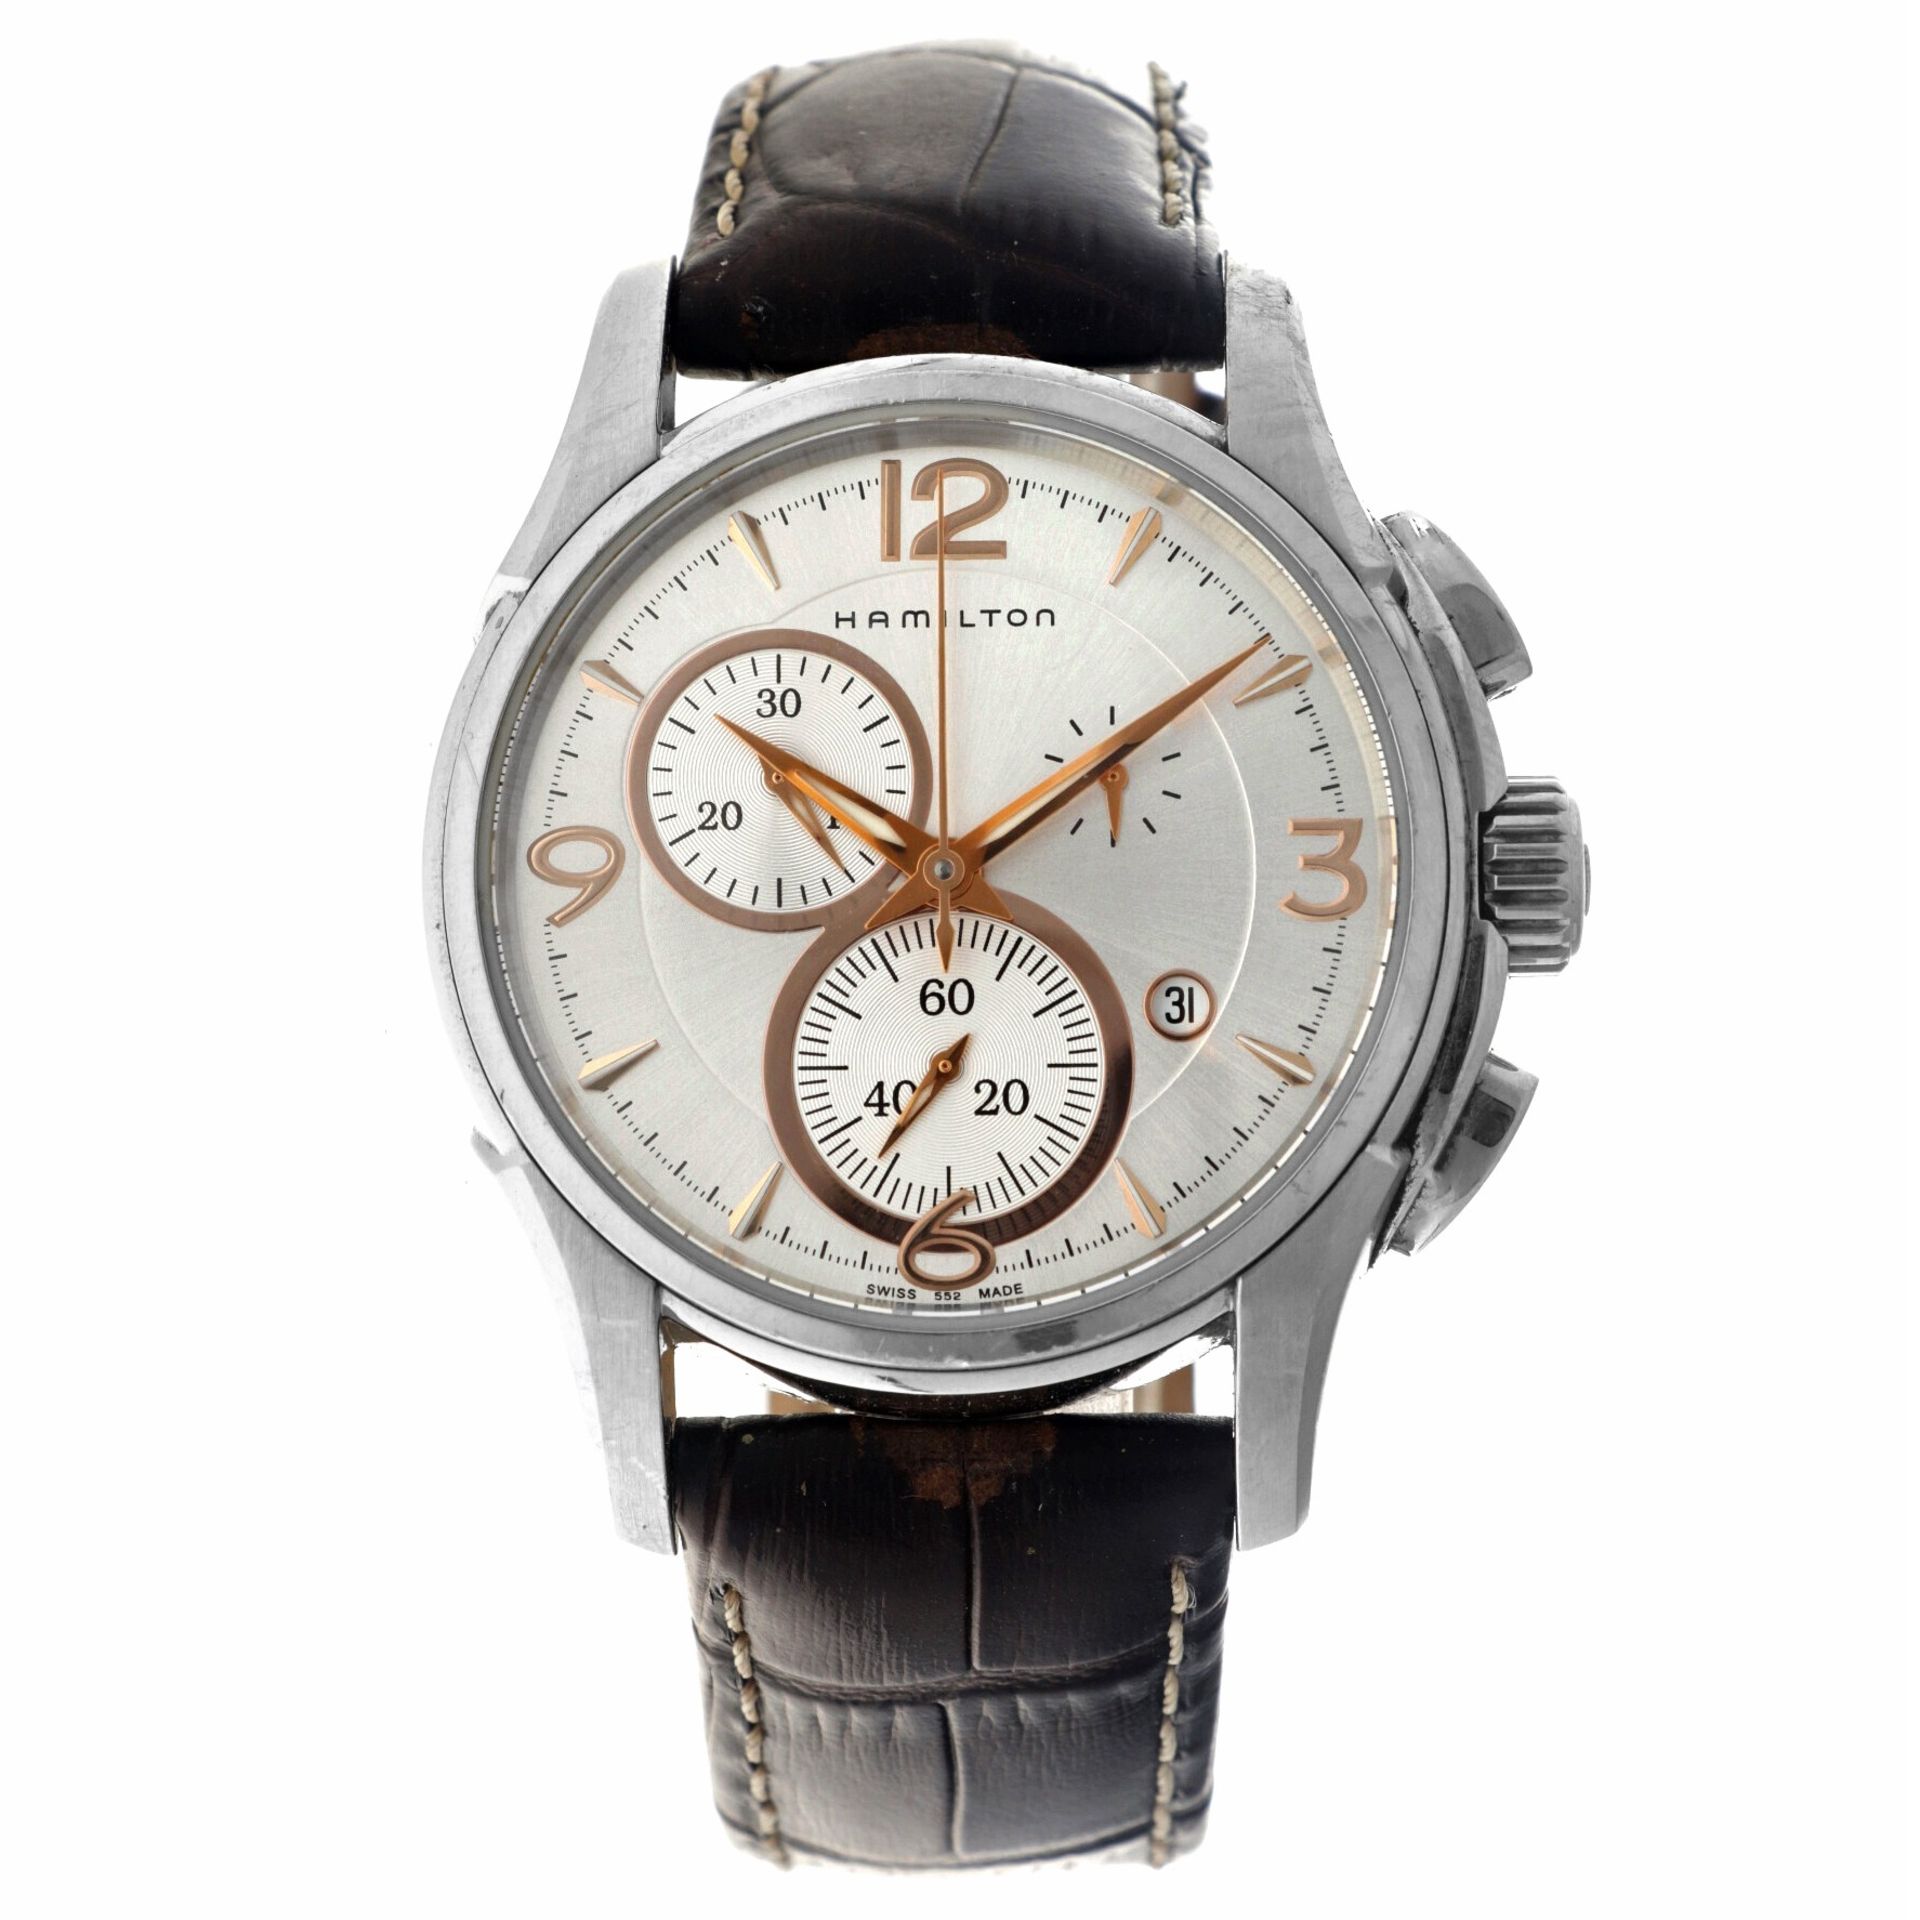 No Reserve - Hamilton Jazzmaster H326120 - Men's watch.